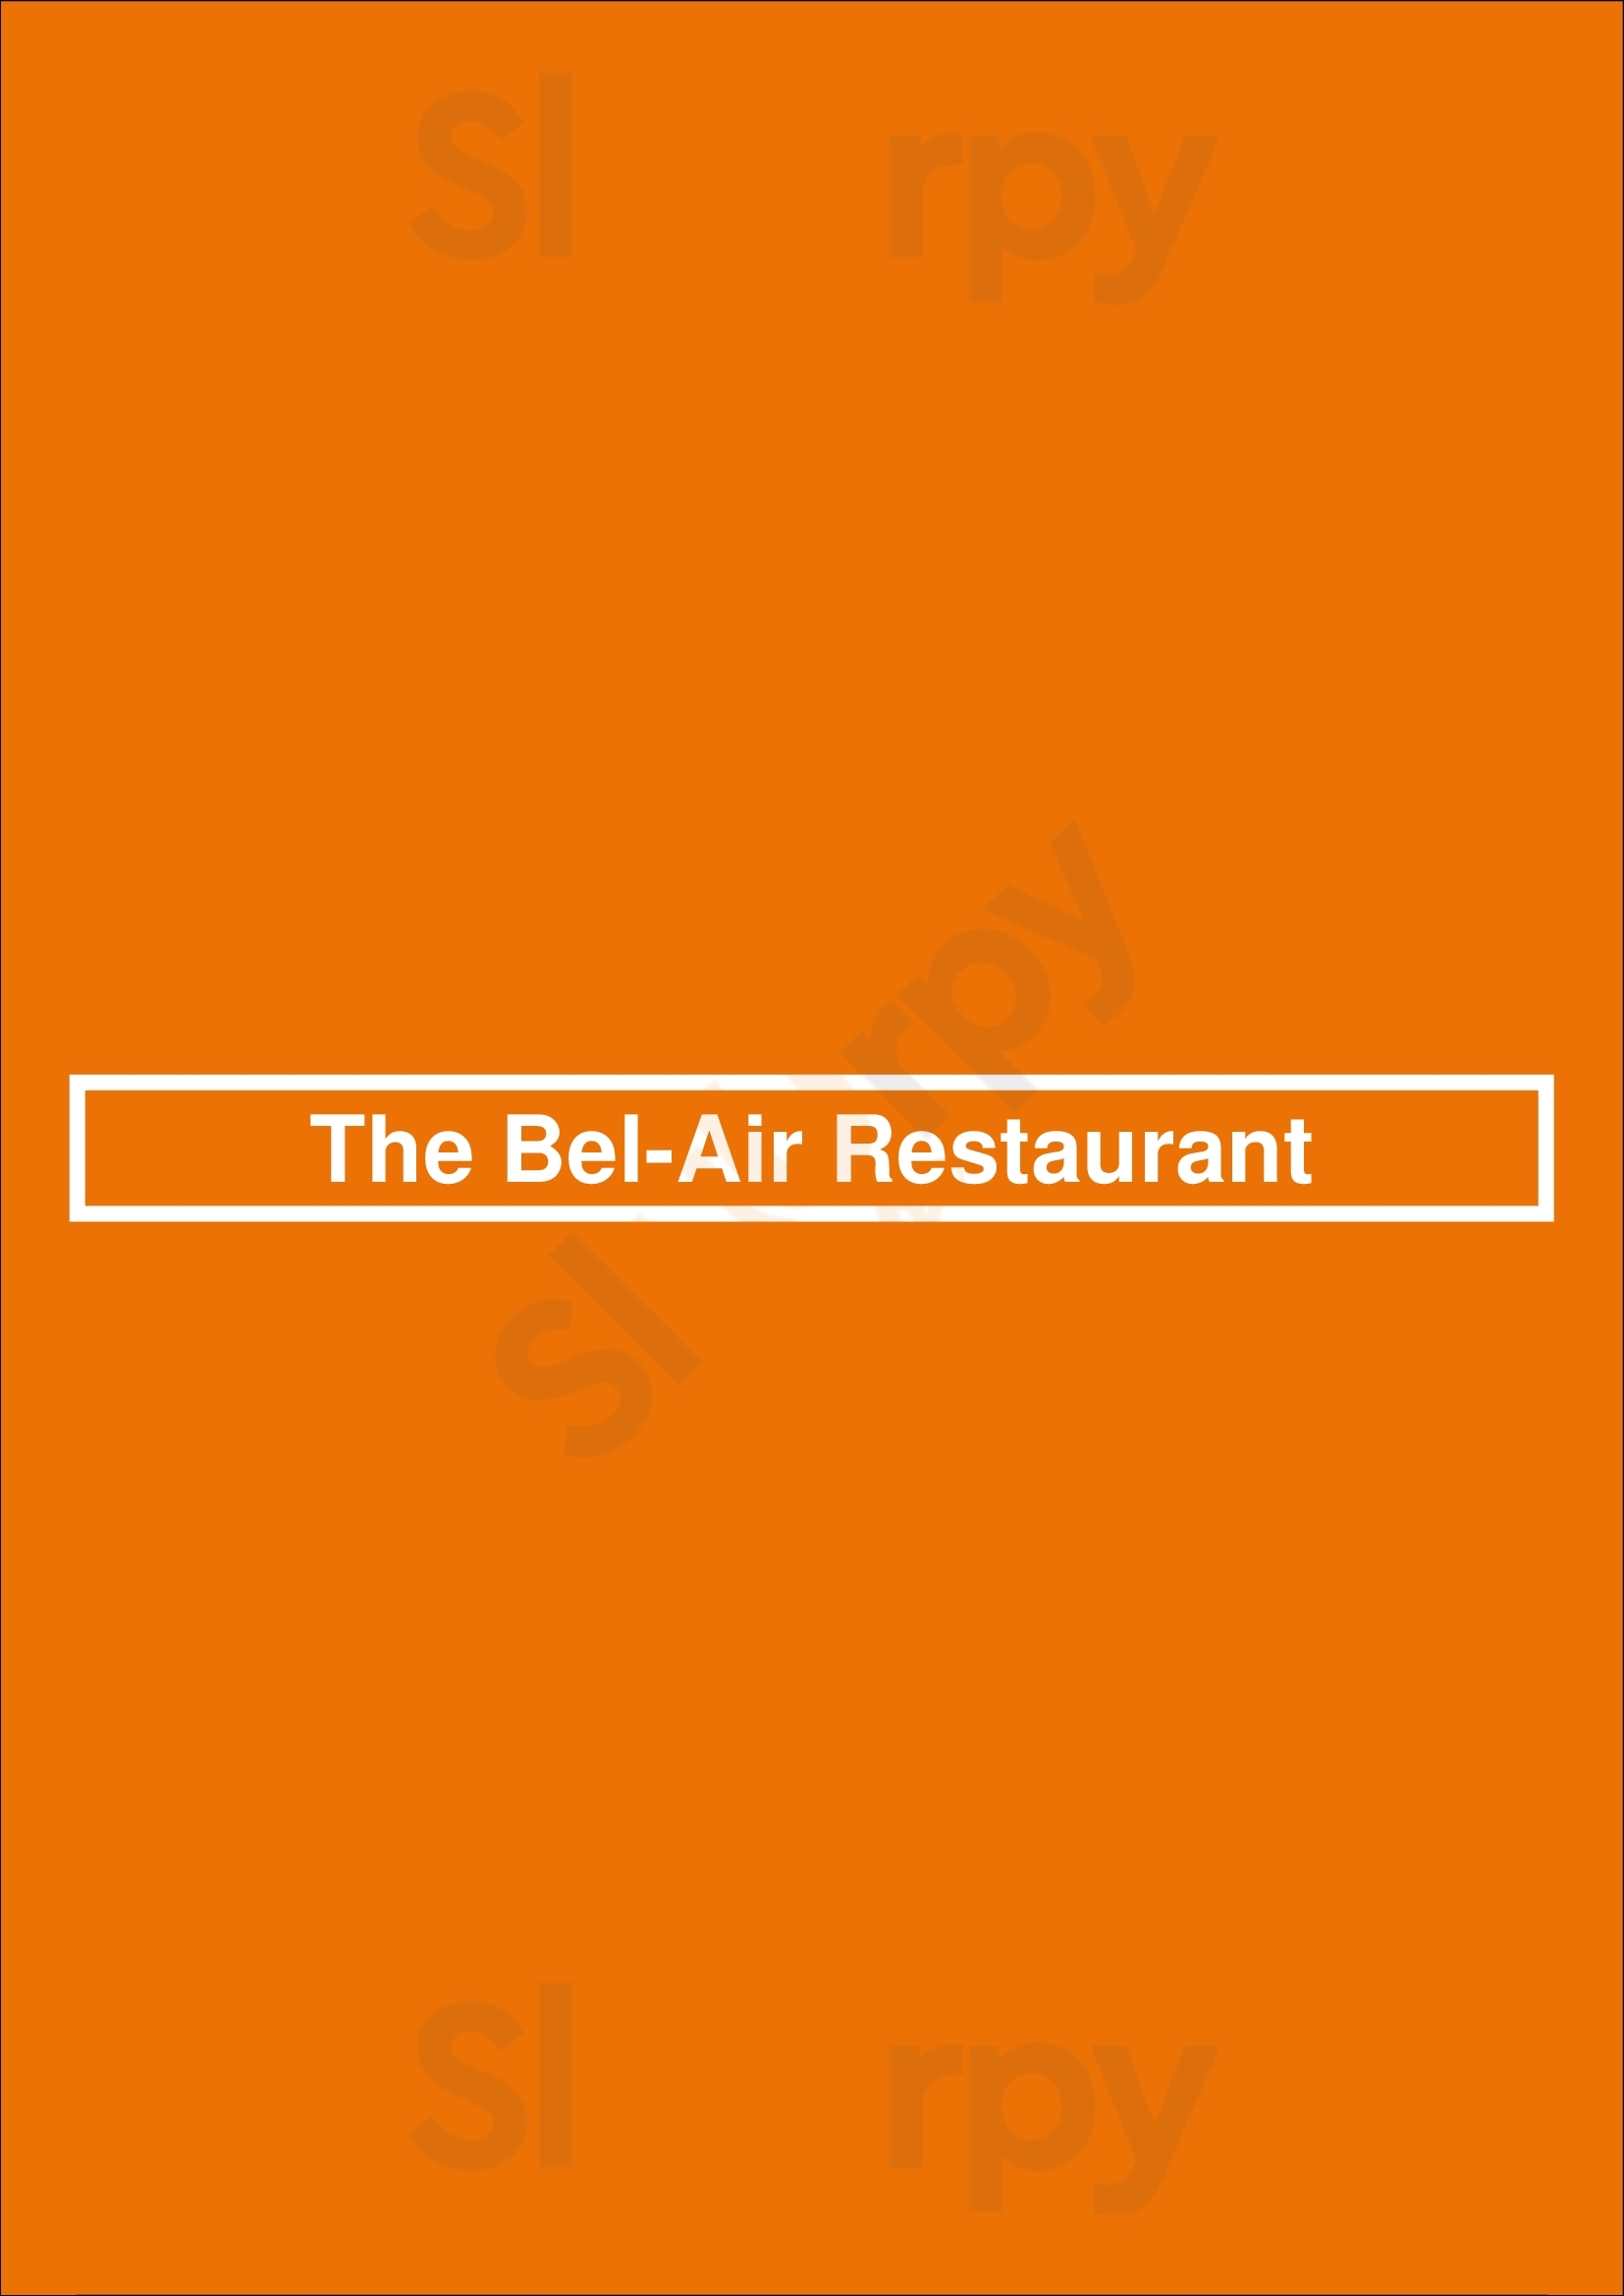 The Bel-air Restaurant Los Angeles Menu - 1